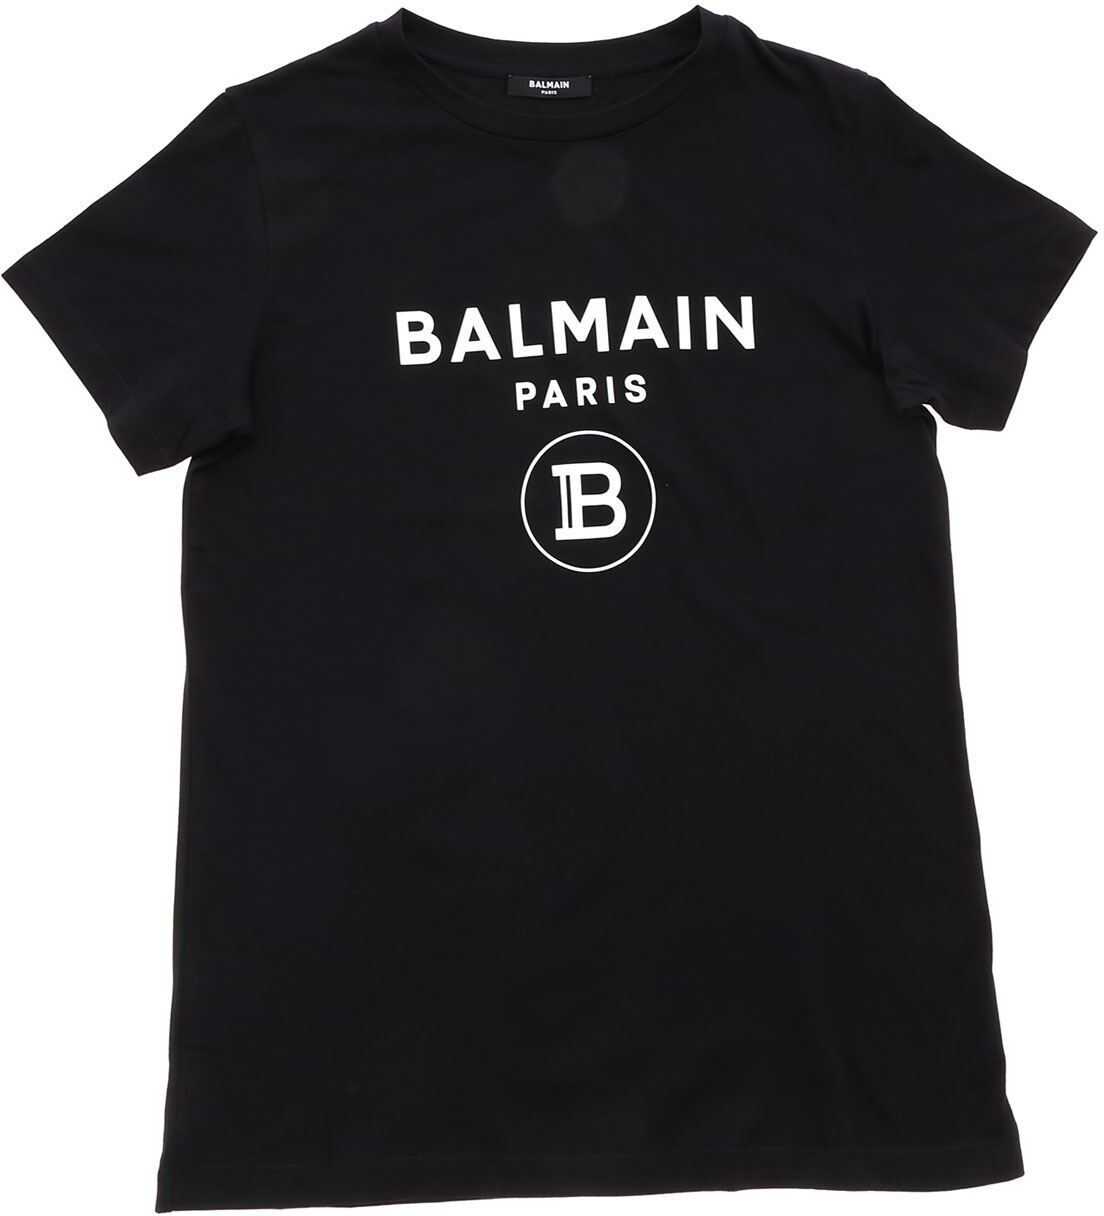 Balmain T-Shirt In Black With White Logo Black